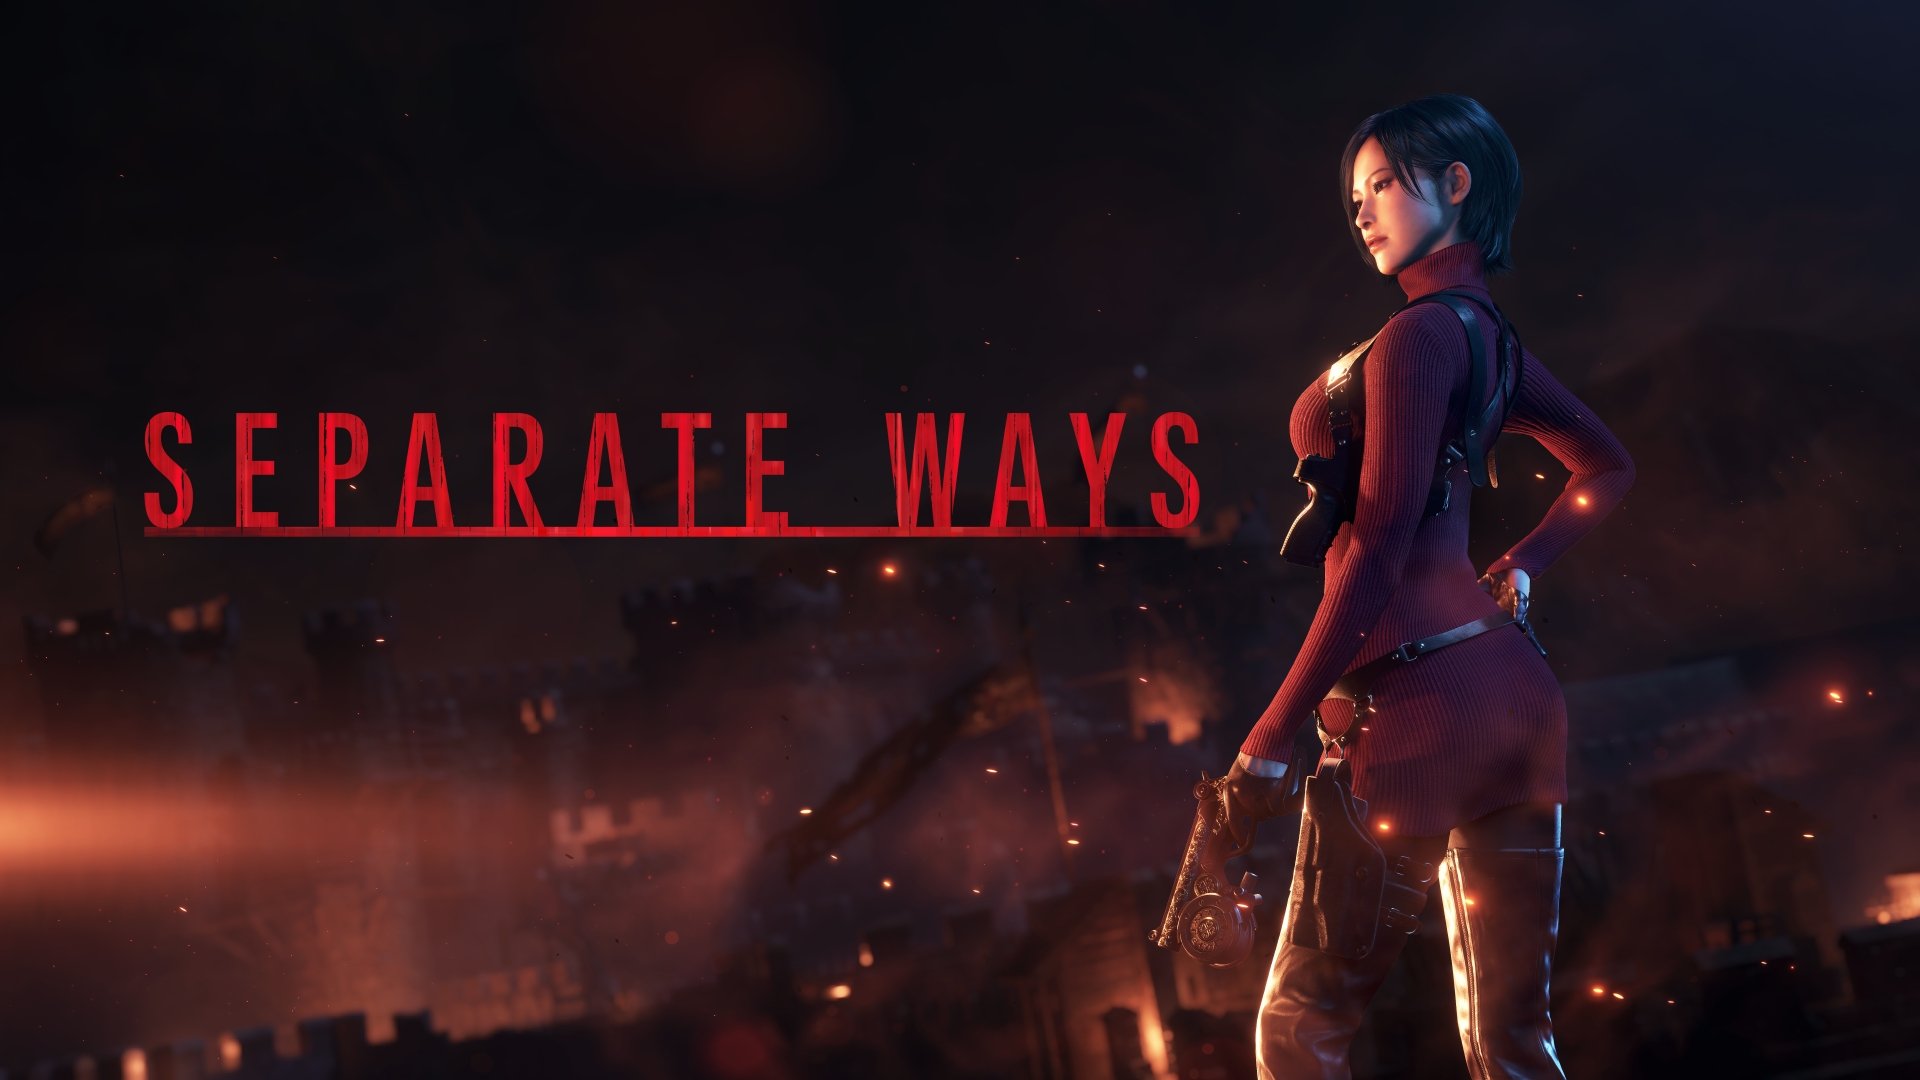 Resident Evil 4 Remake's Separate Ways DLC arrives next week - Xfire